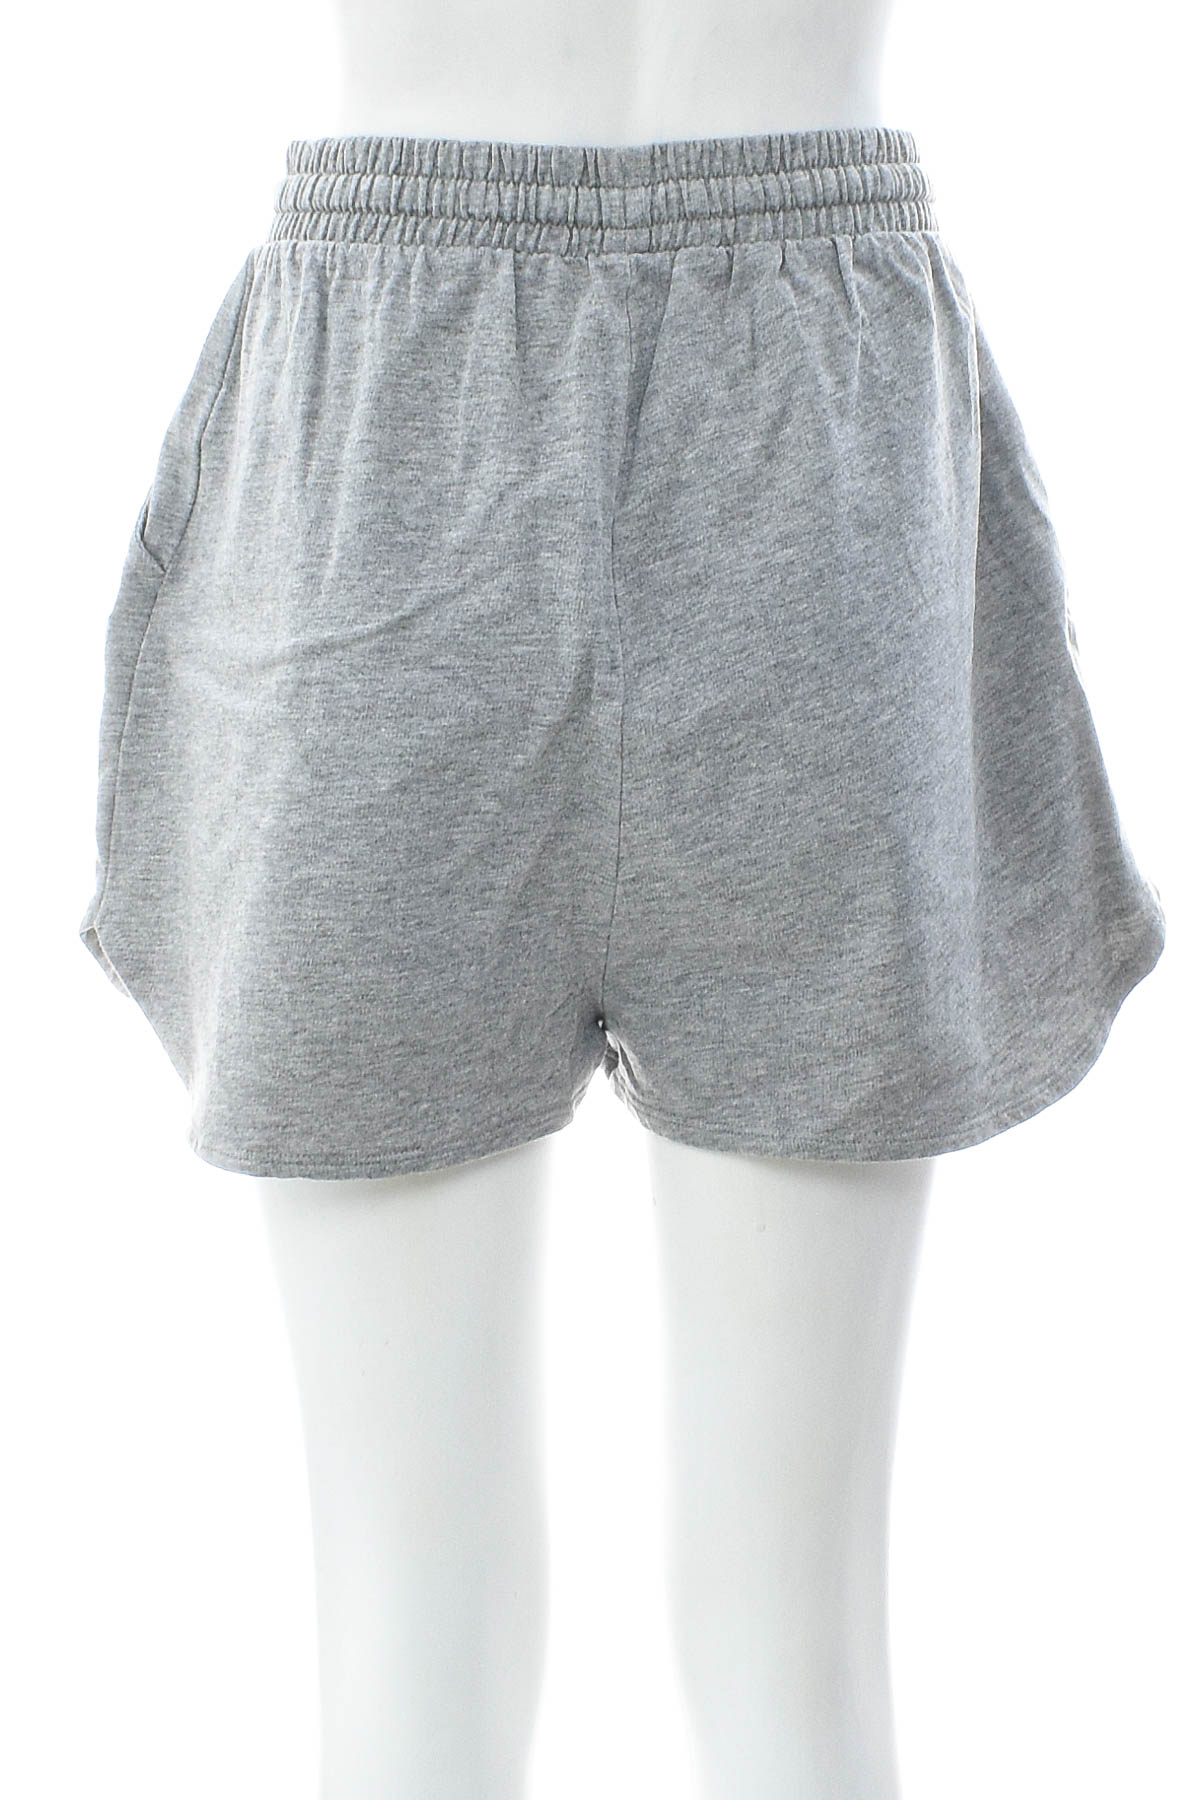 Female shorts - Asos - 1